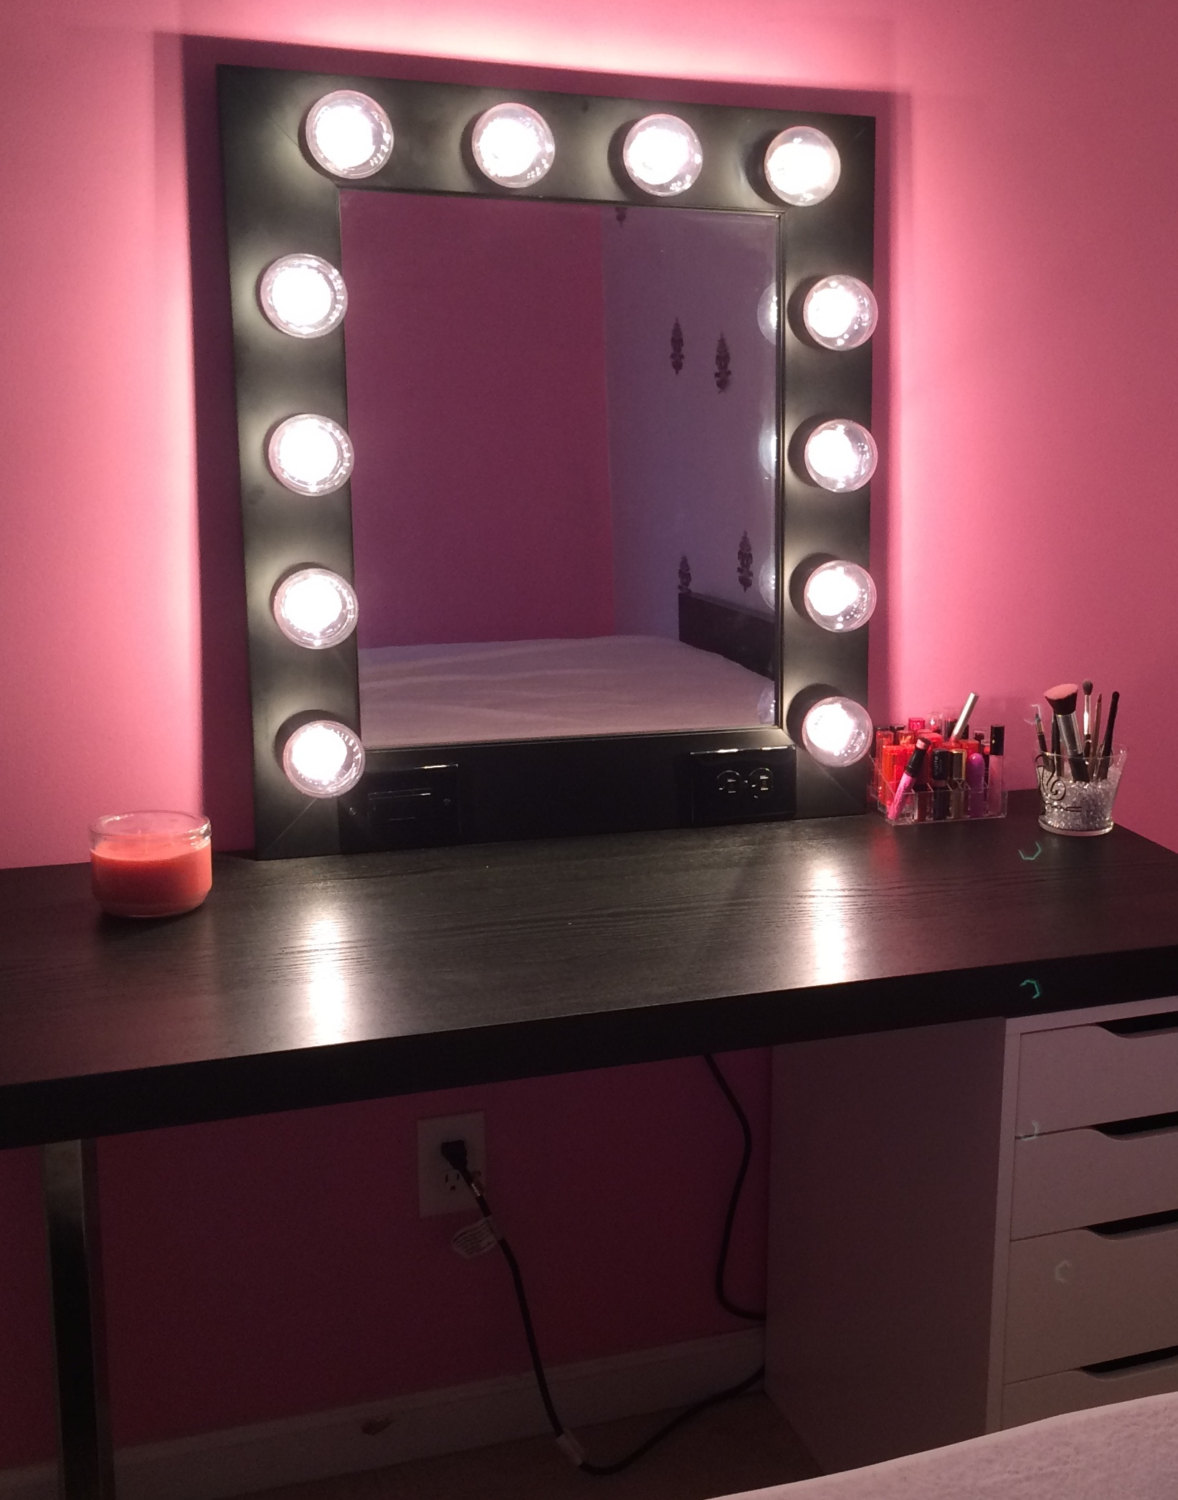 10 reasons to buy Wall makeup mirror with lights | Warisan ...